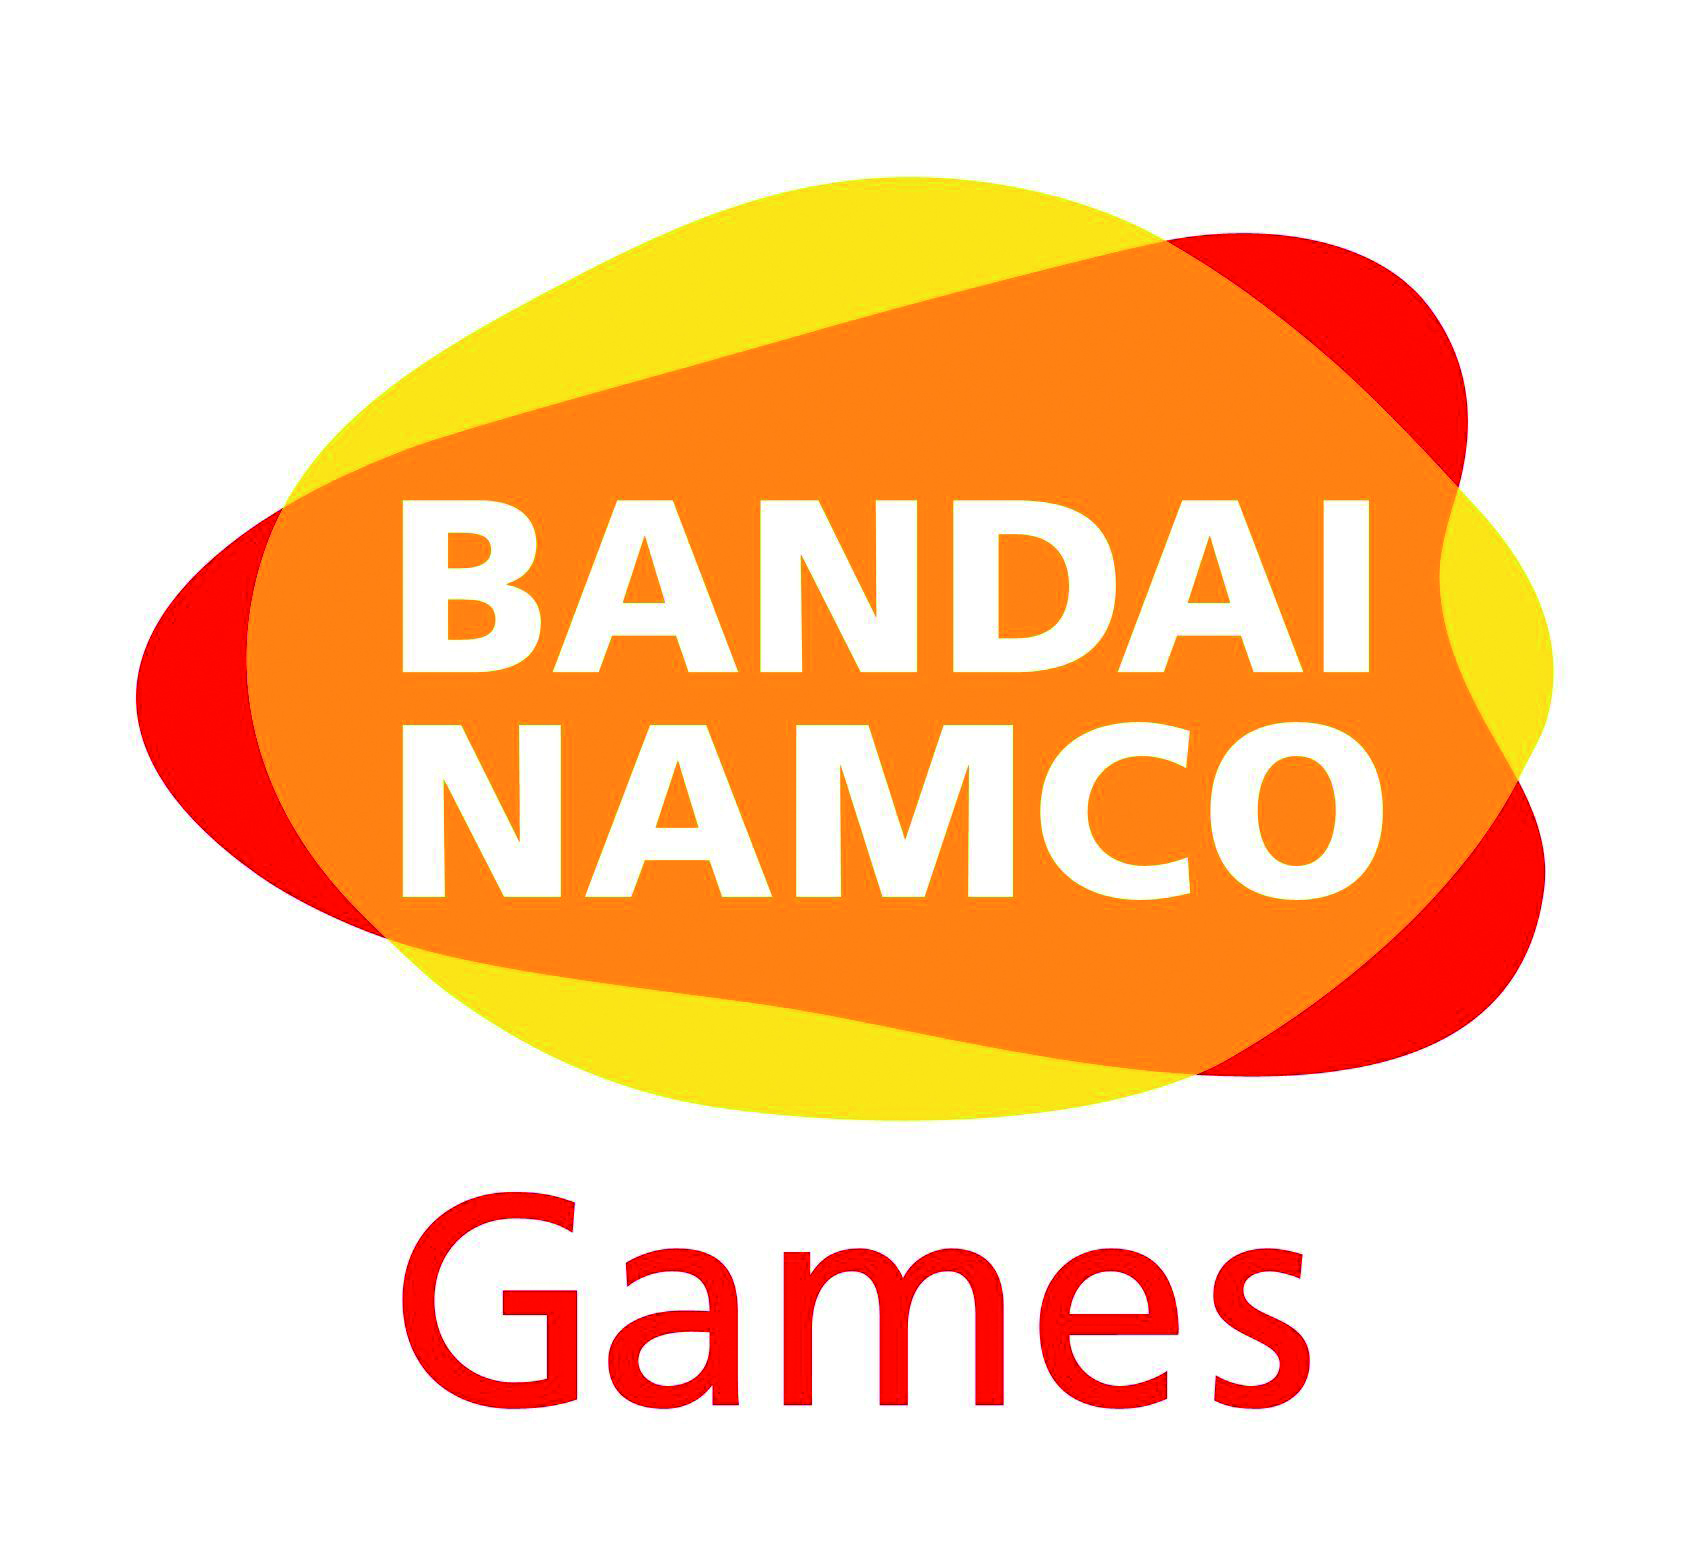 Bandai_Namco_Games-min.jpg